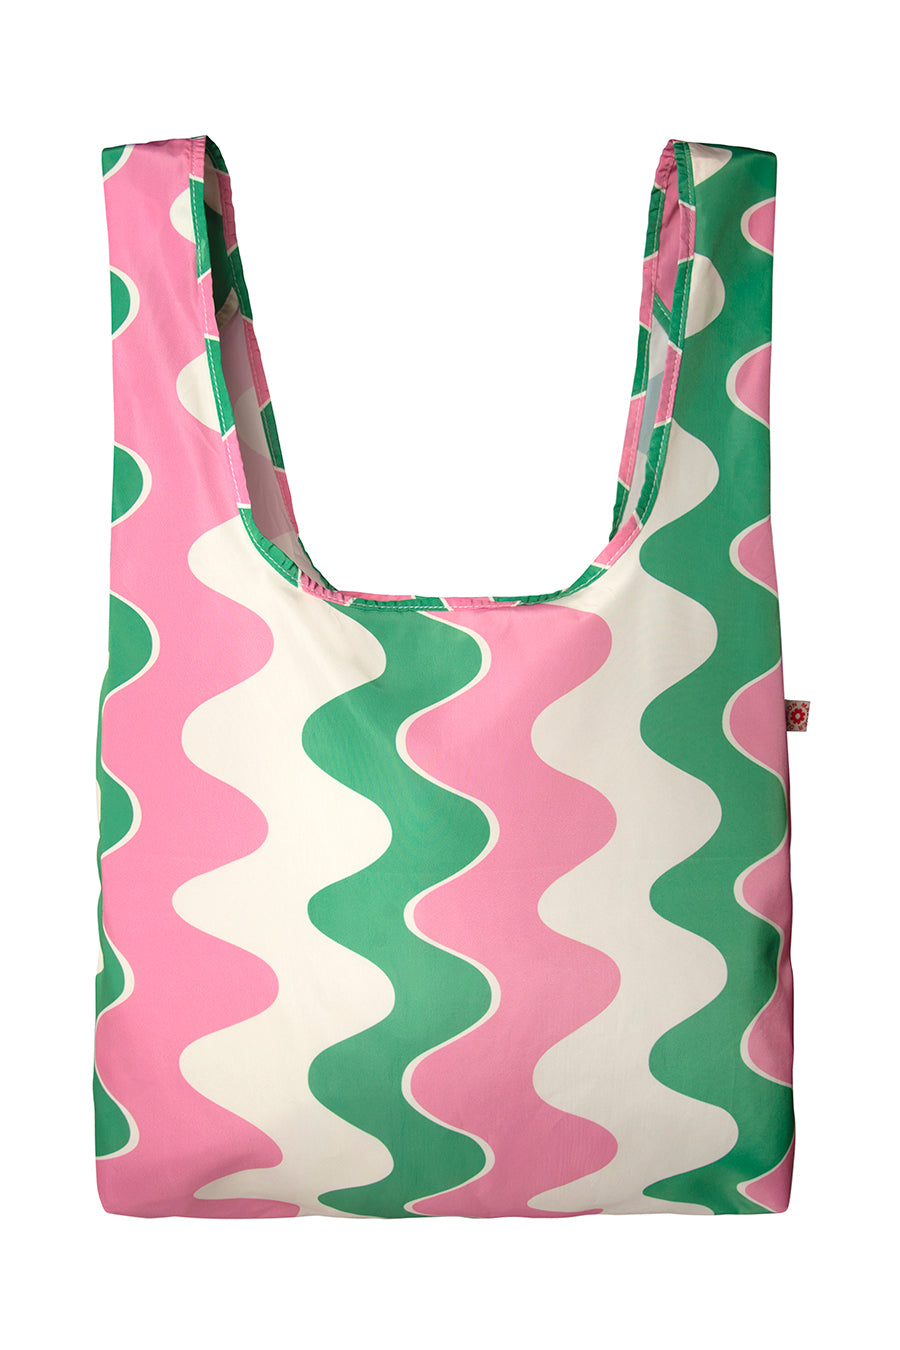 shopper bag in wavy print